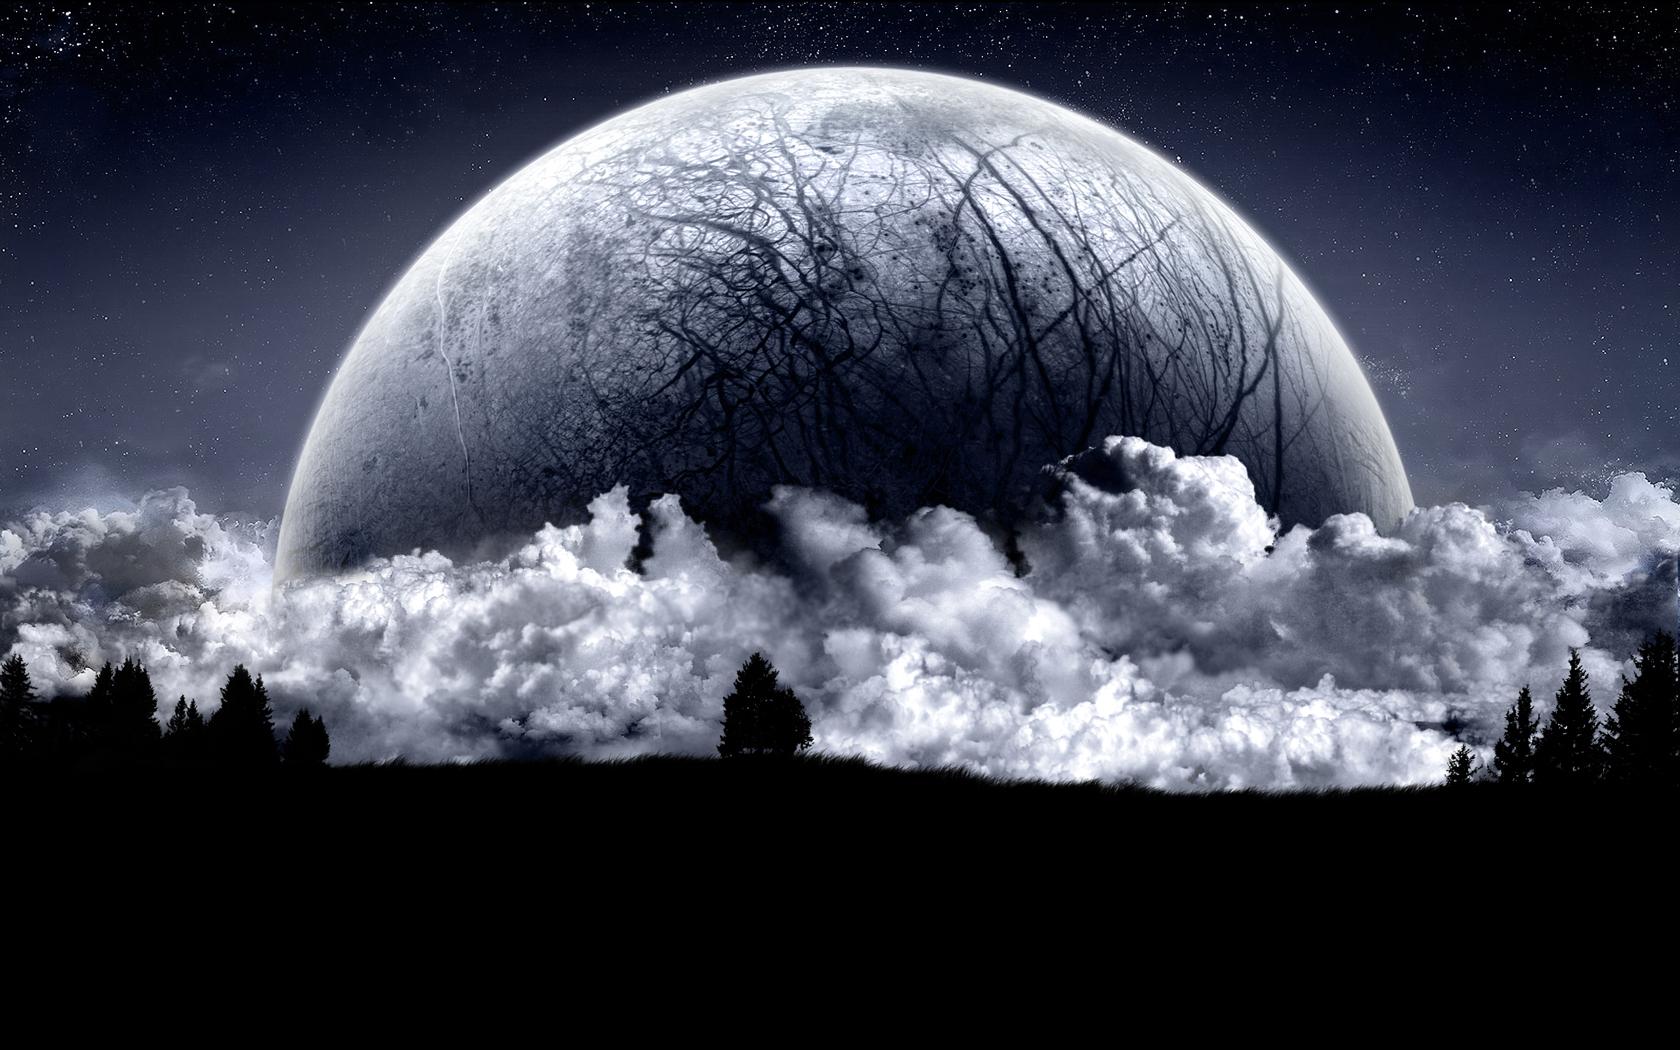 The birth of Europa moon free desktop background wallpaper